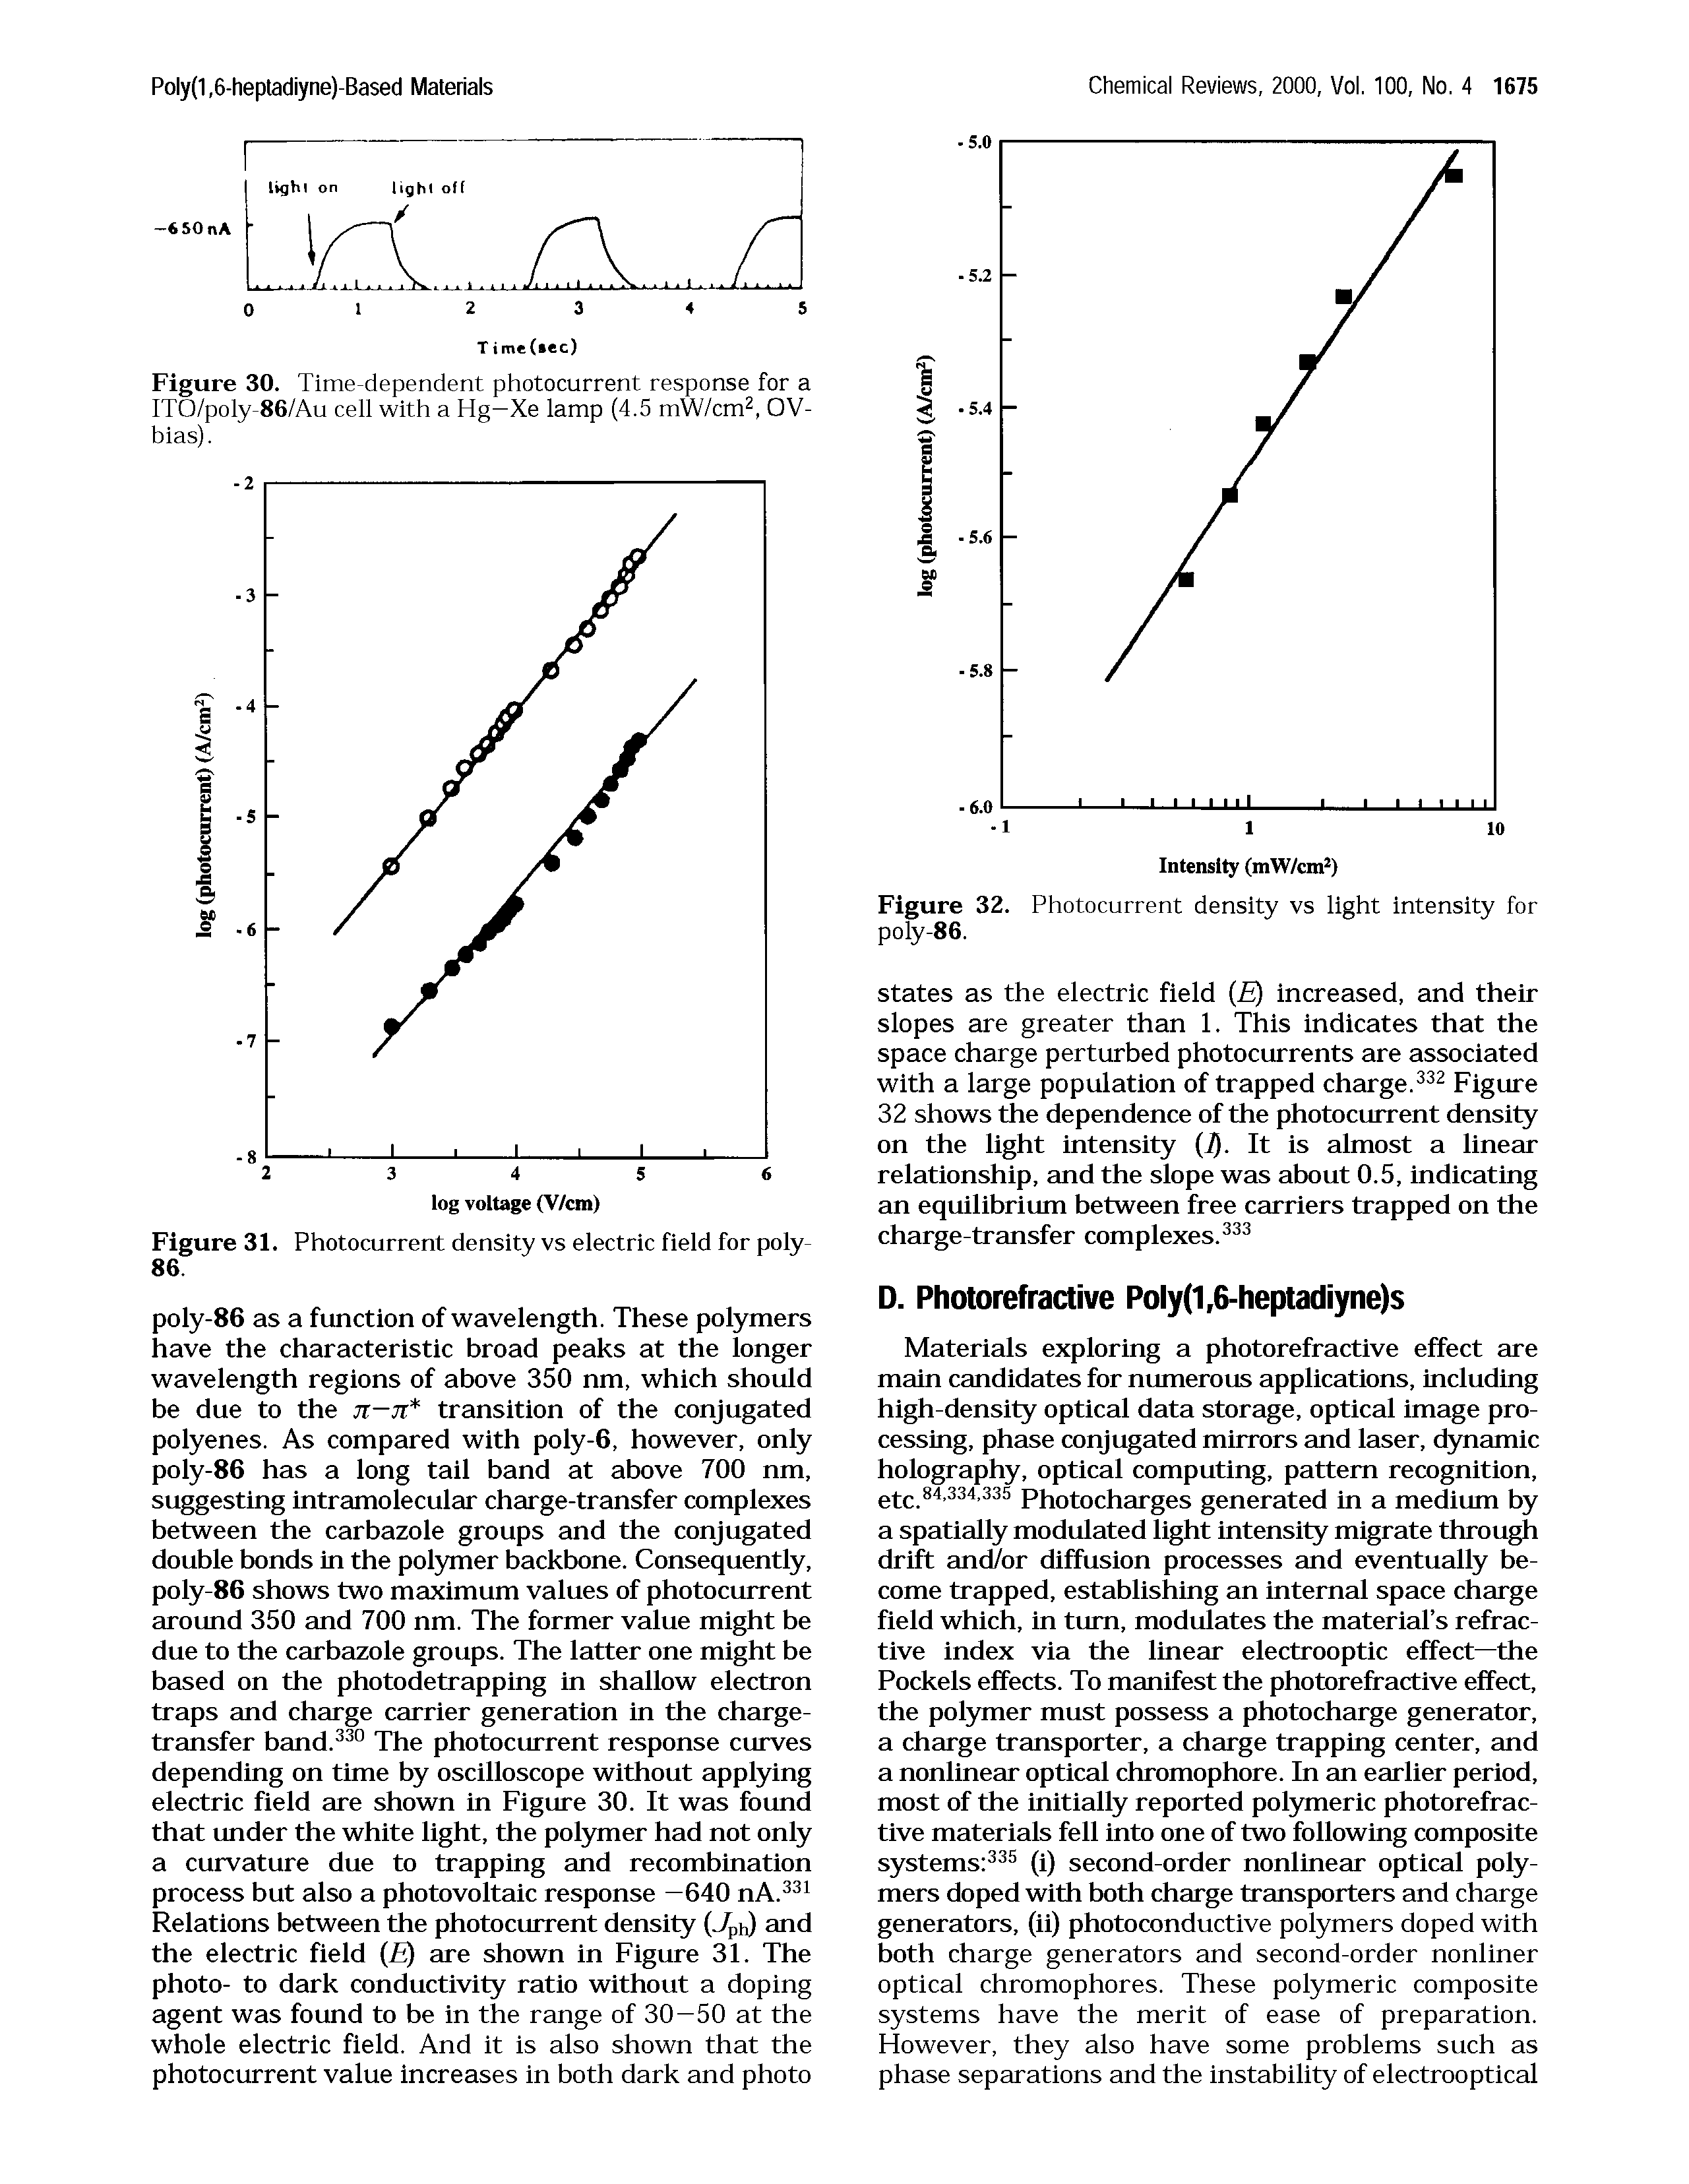 Figure 32. Photocurrent density vs light intensity for poly-86.